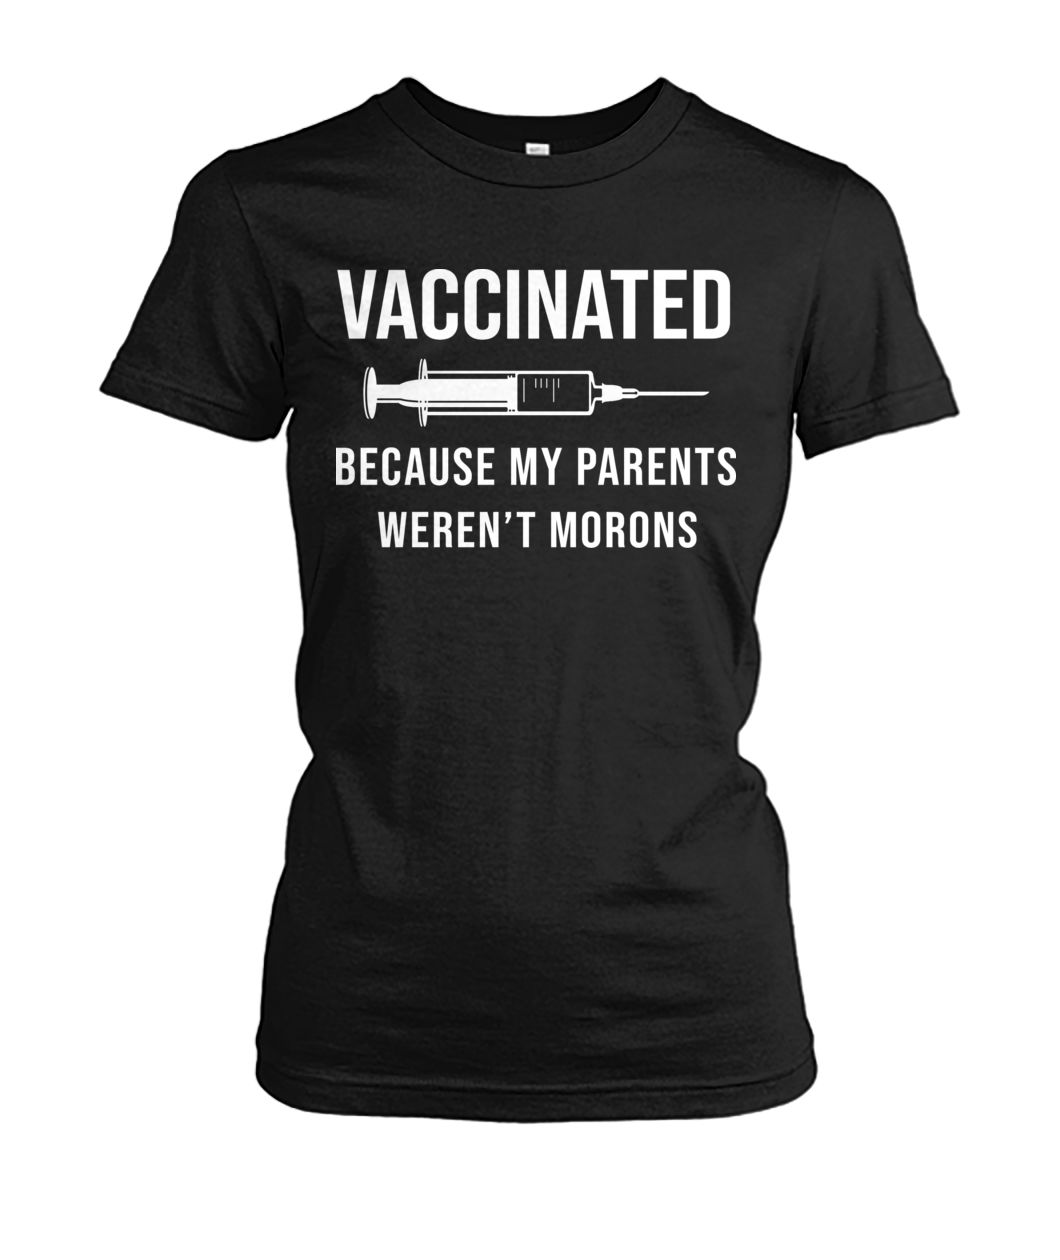 Nurse vaccinated because my parents weren't morons women's crew tee